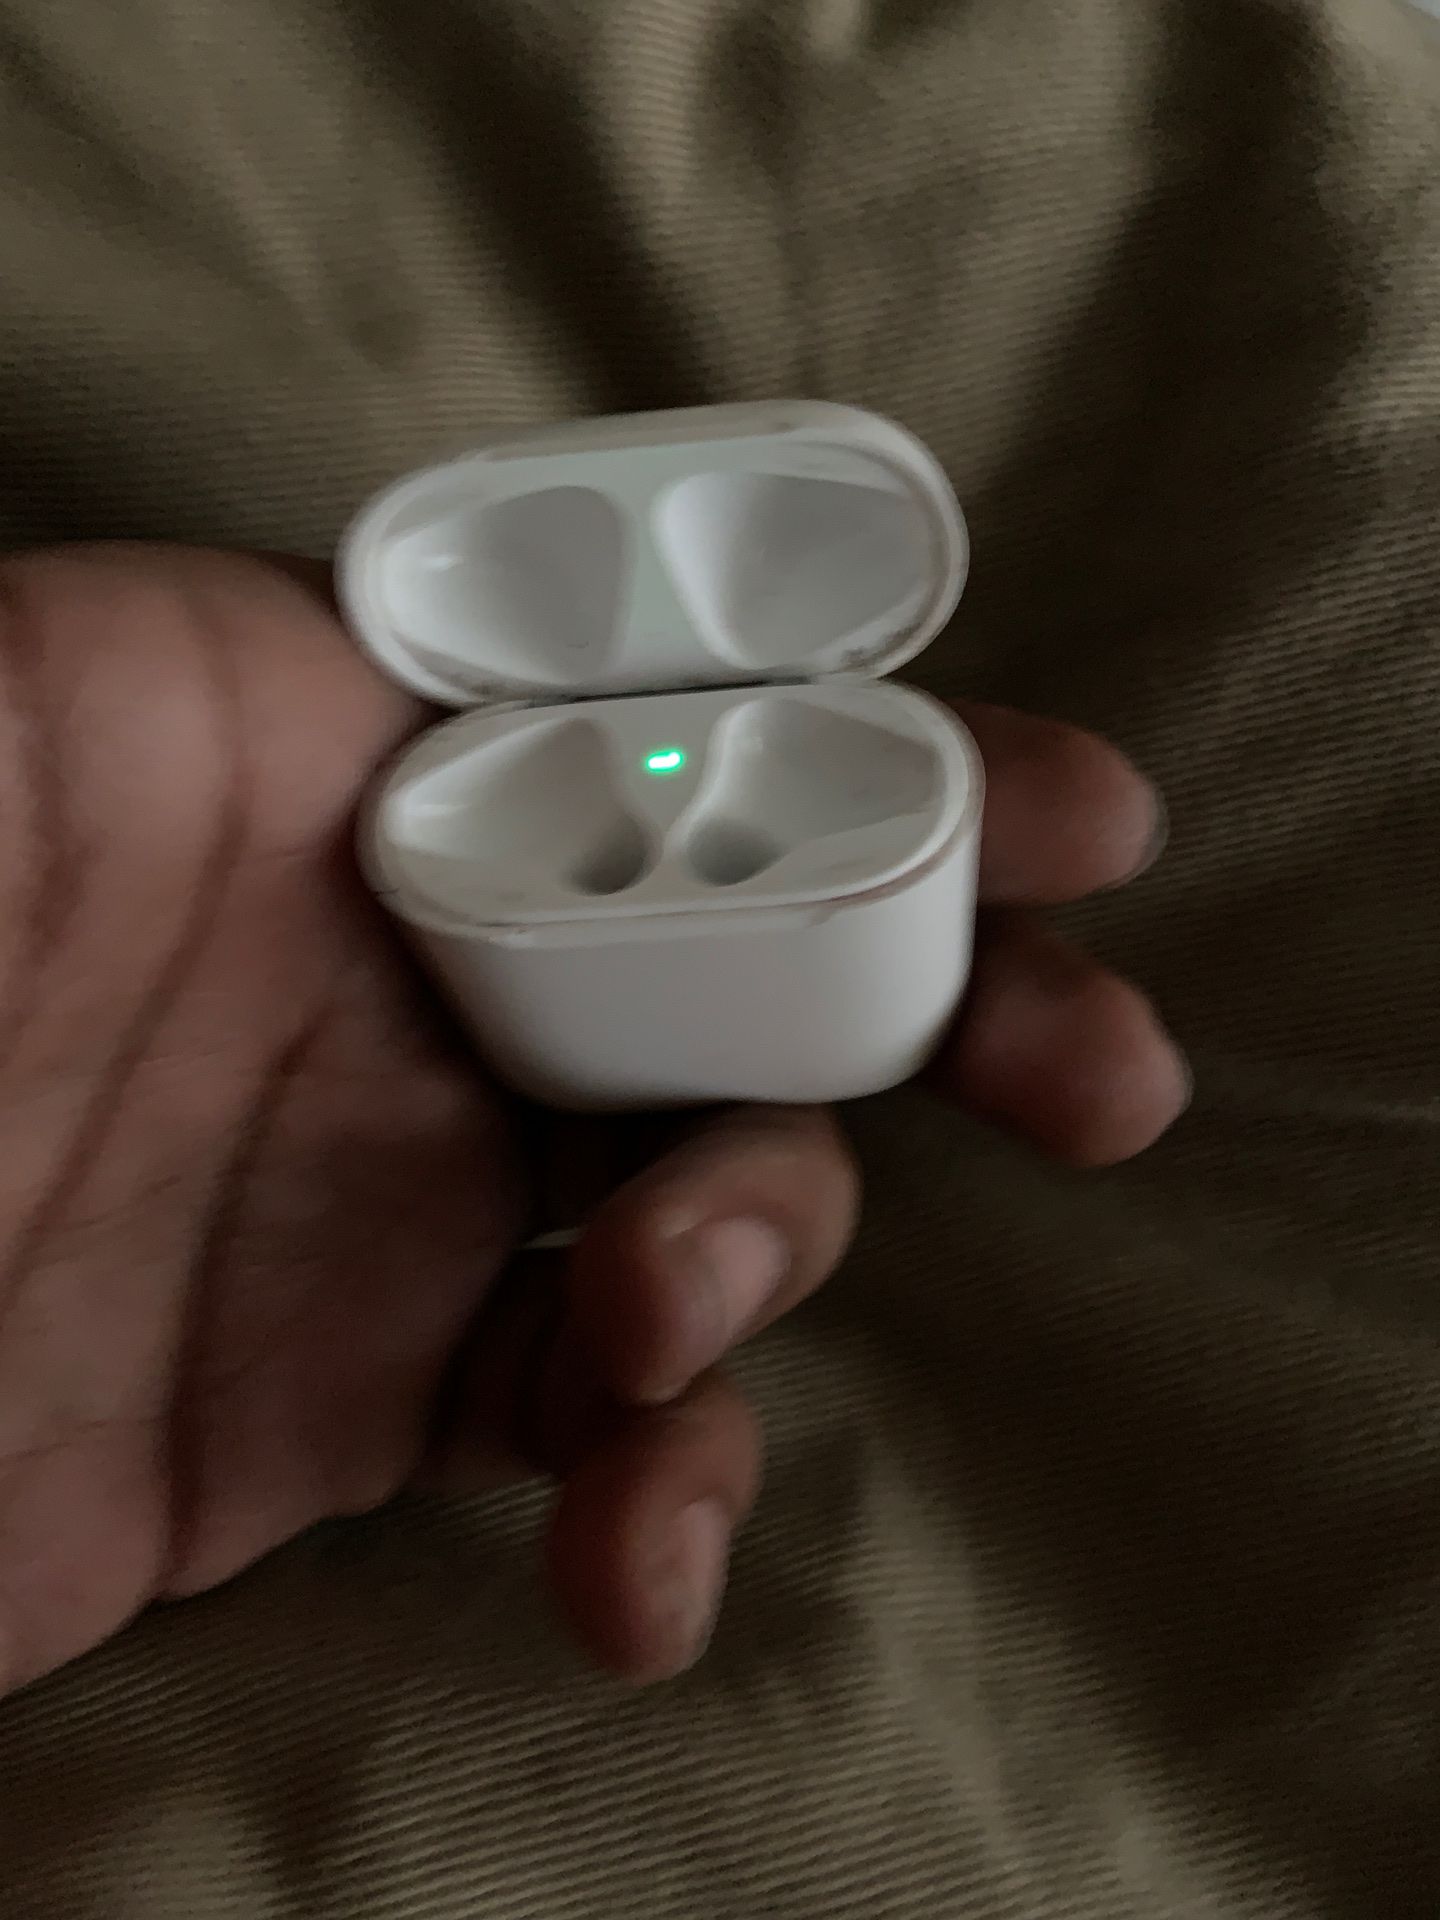 1st gen Apple air pods charging case